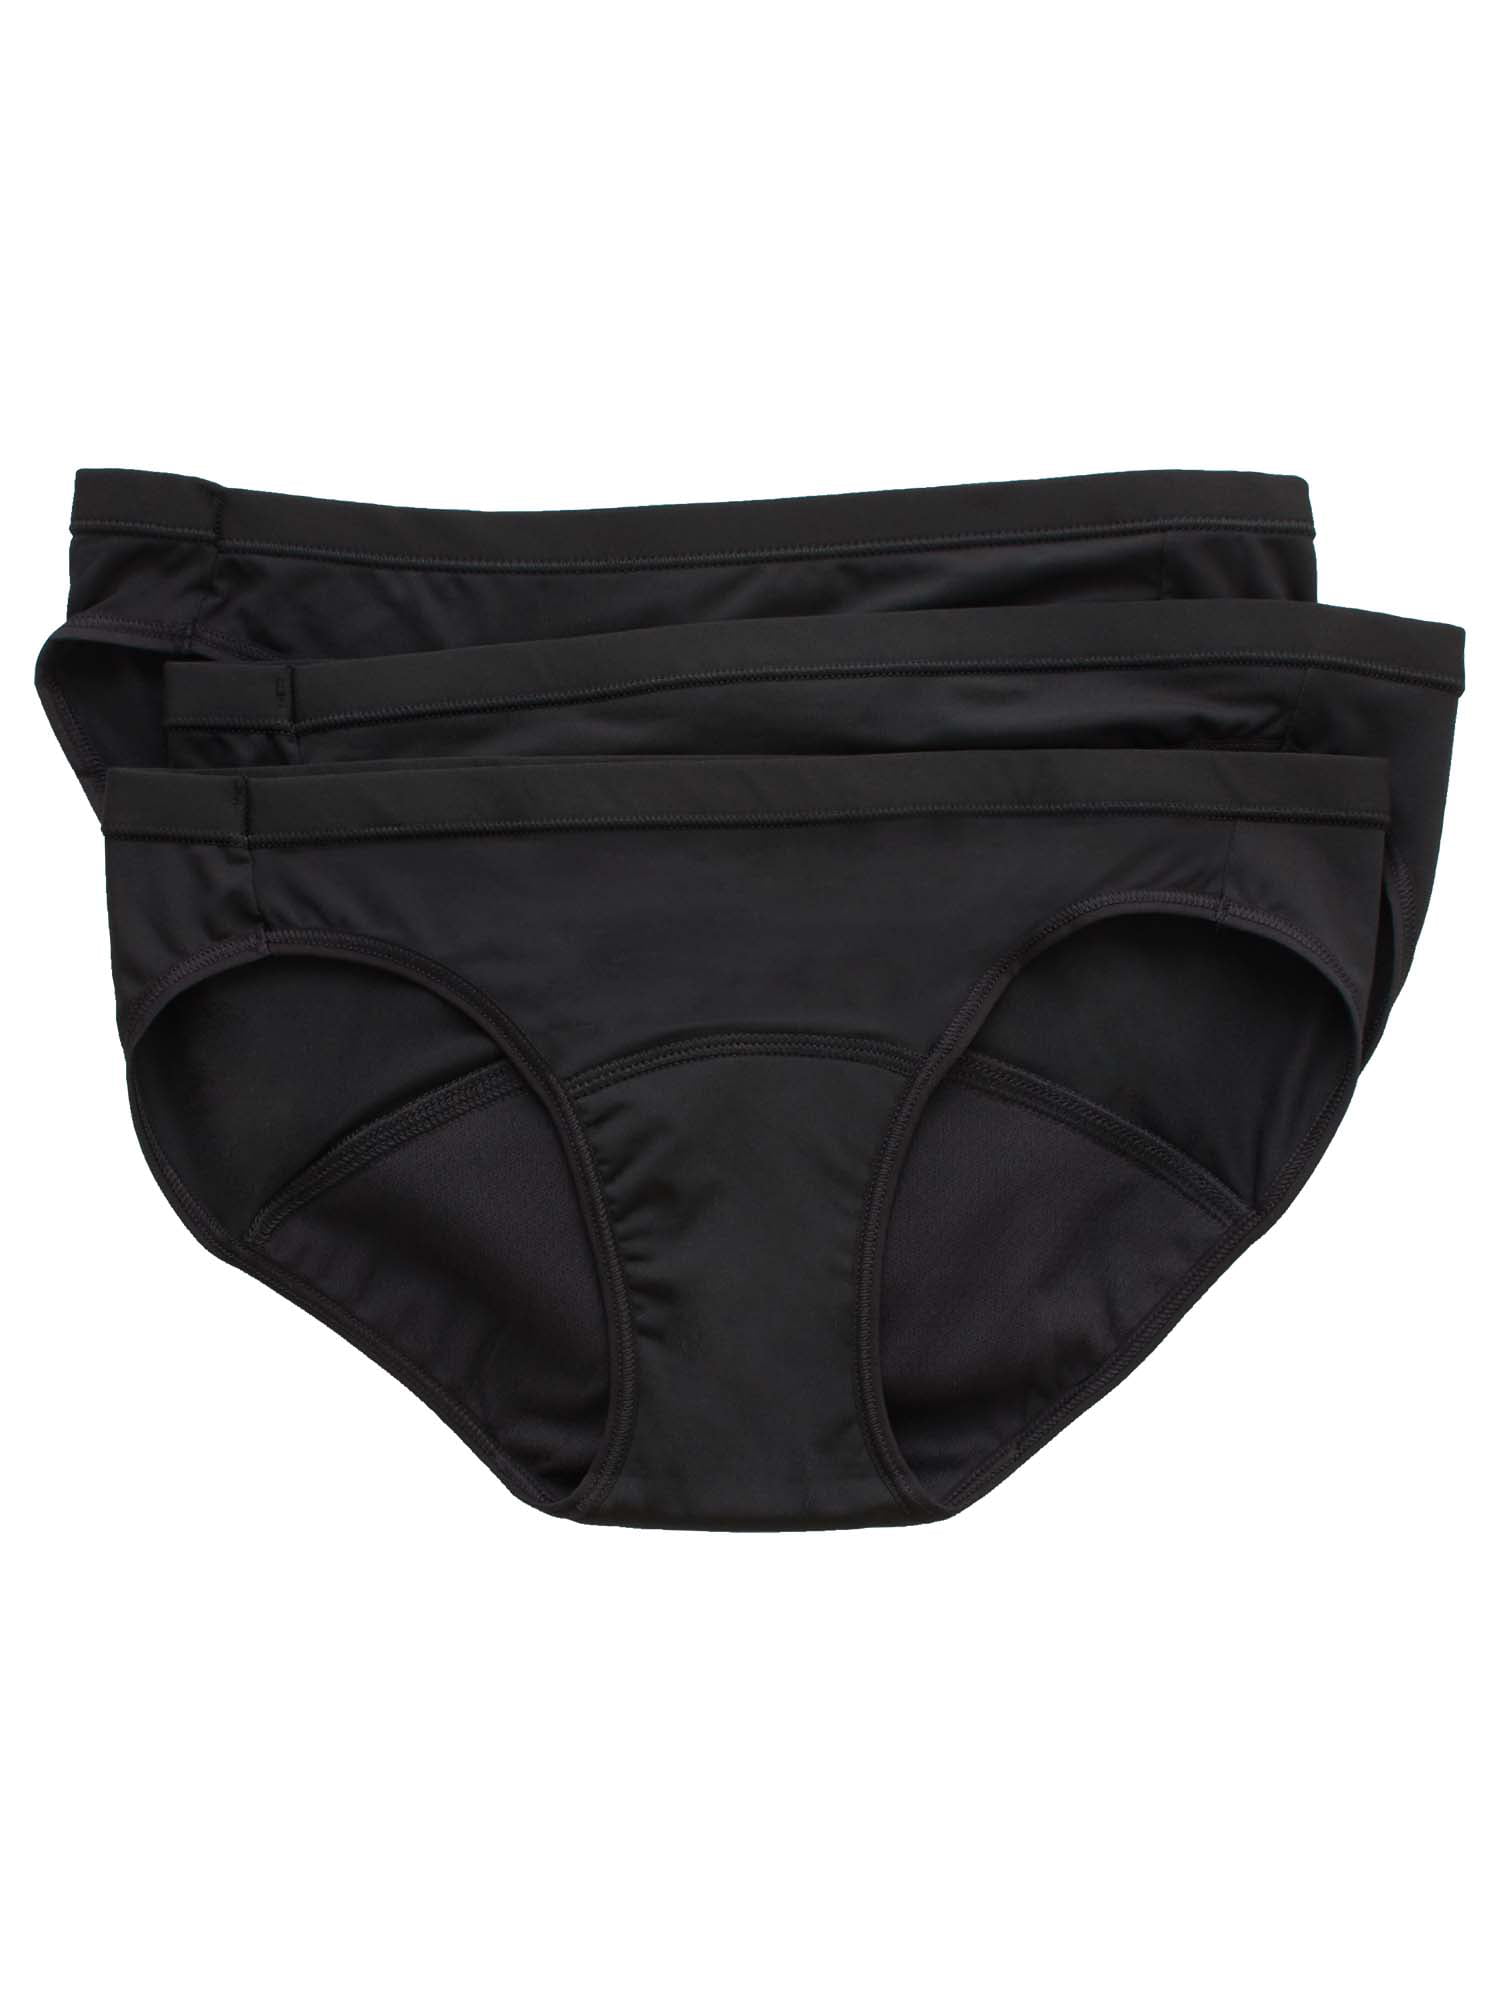 Hanes Comfort, Period.™ Bikini Underwear, Light Leaks, Black, 3-Pack 8 ...